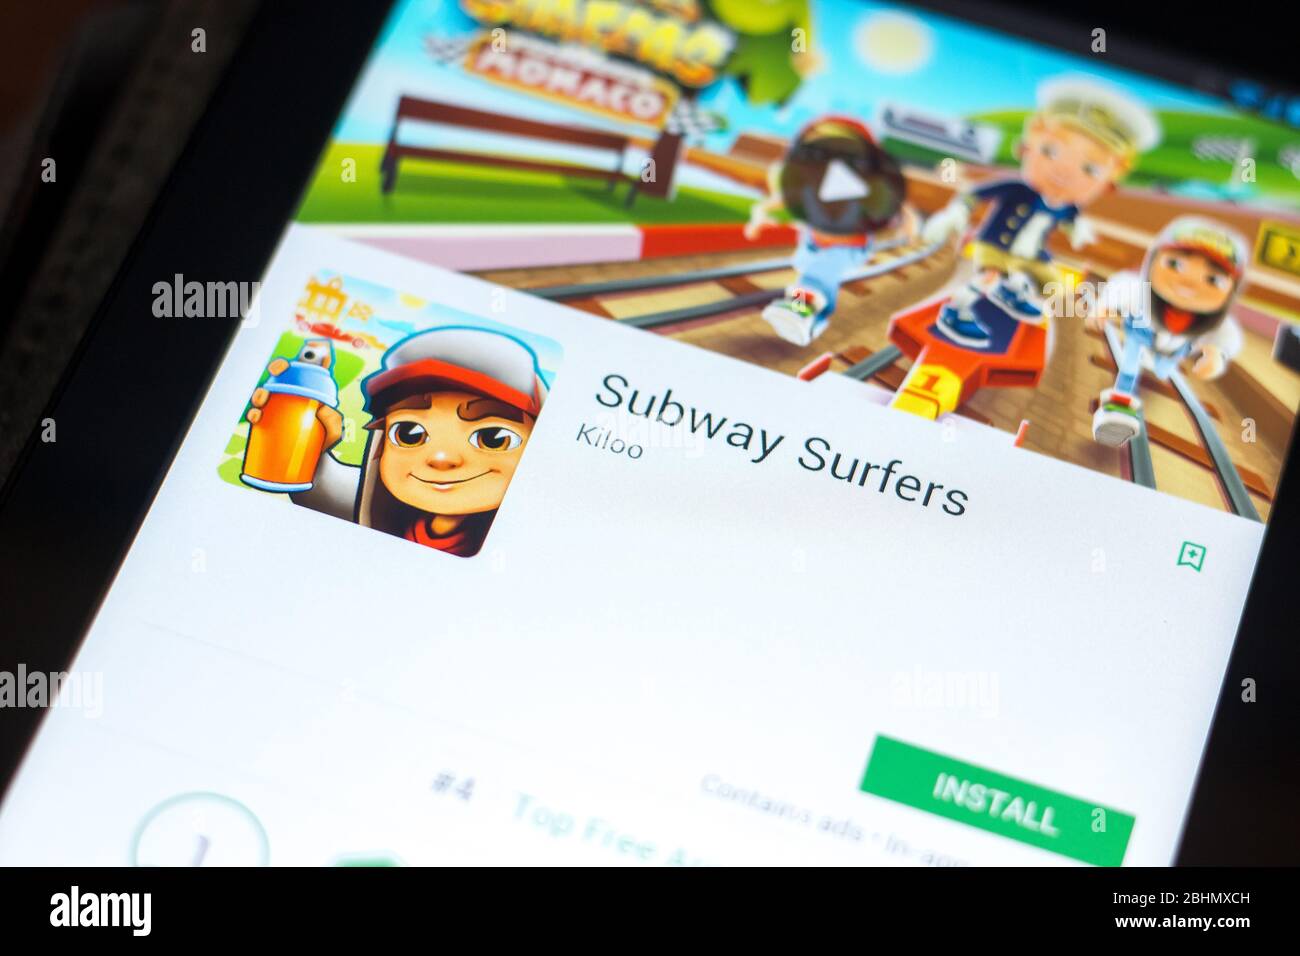 Subway Surfers na App Store